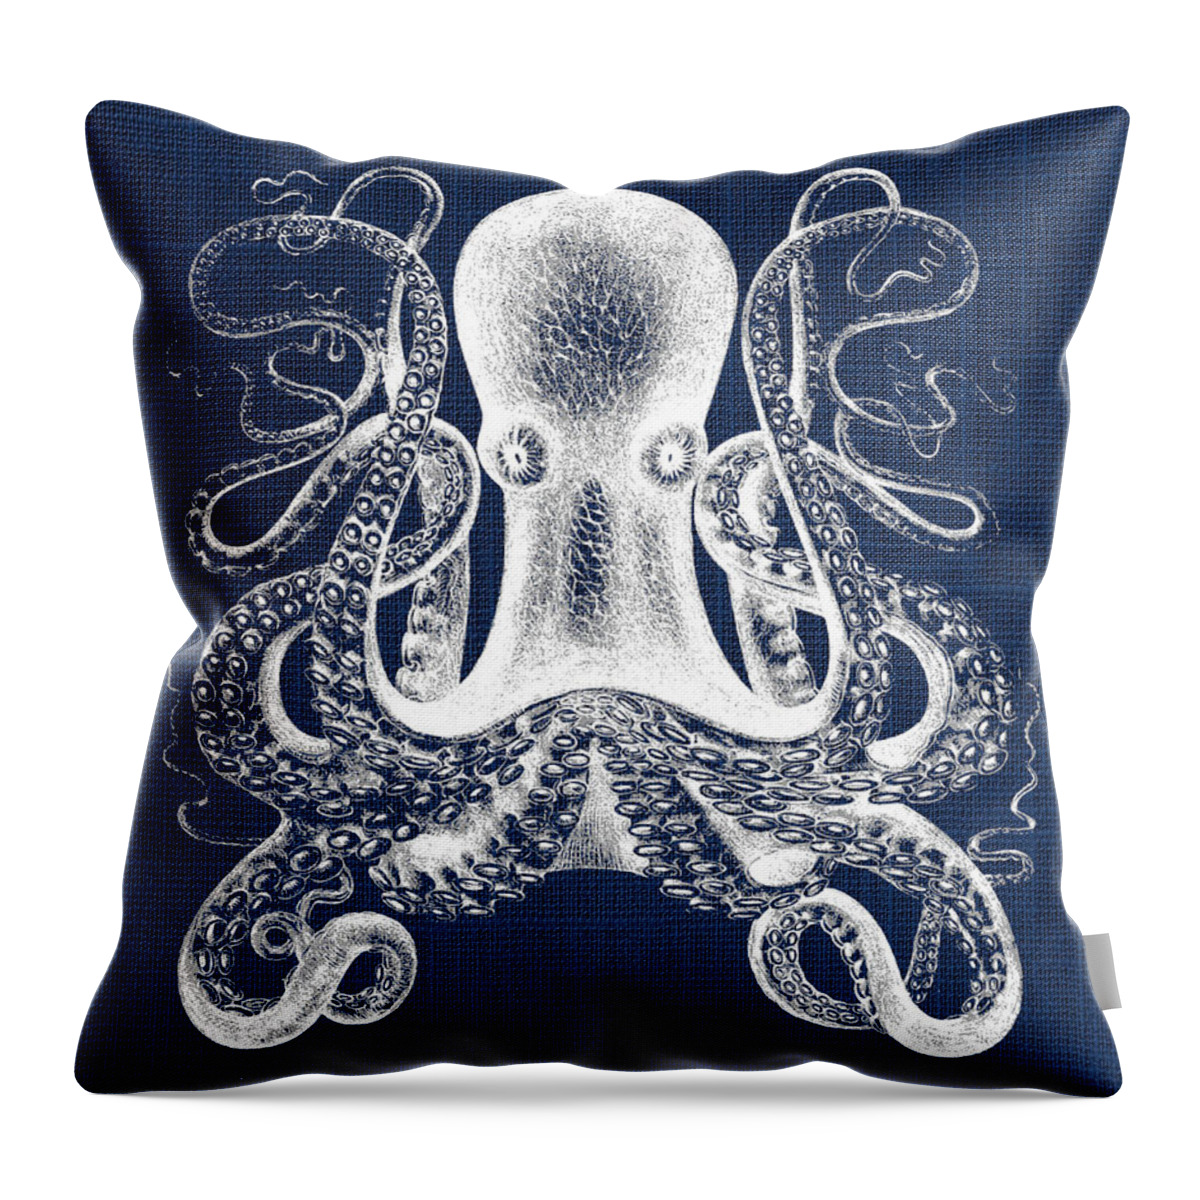 Vintage Throw Pillow featuring the digital art Octopus Nautical Print by Jaime Friedman